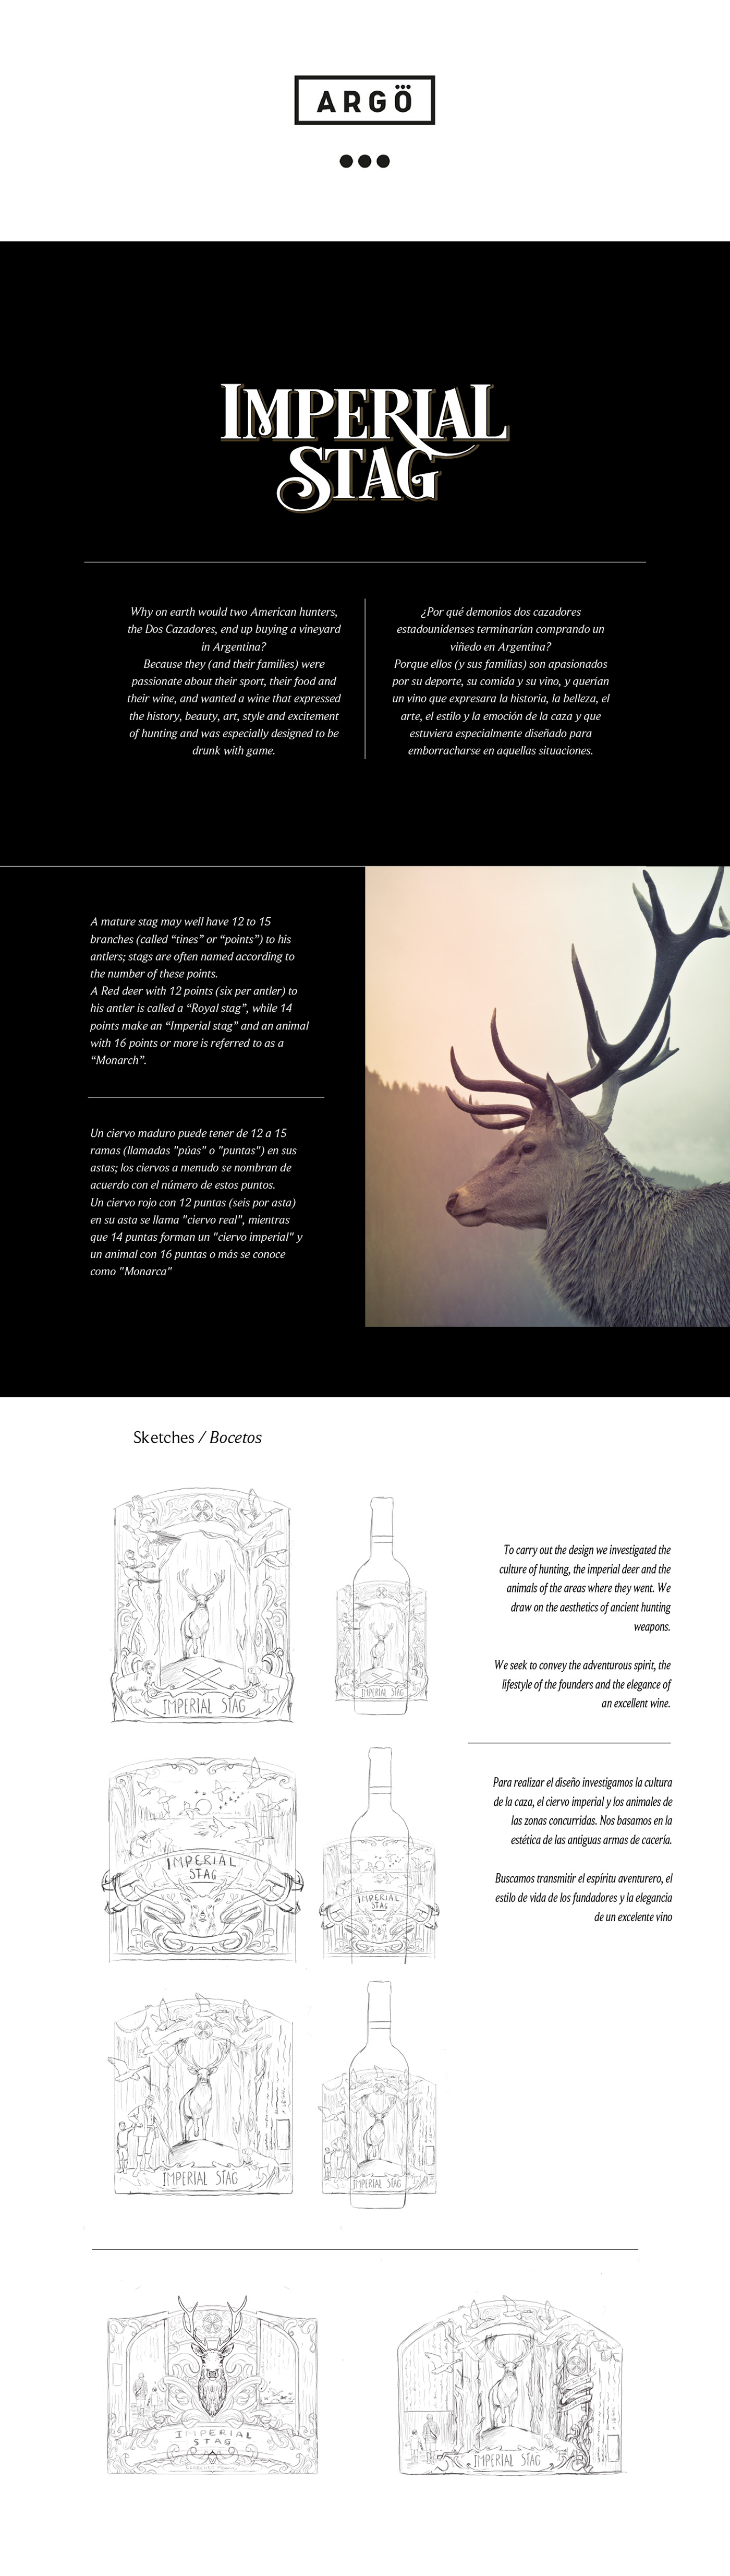 argo ciervo deer imperial Label label wine Packaging stag wine